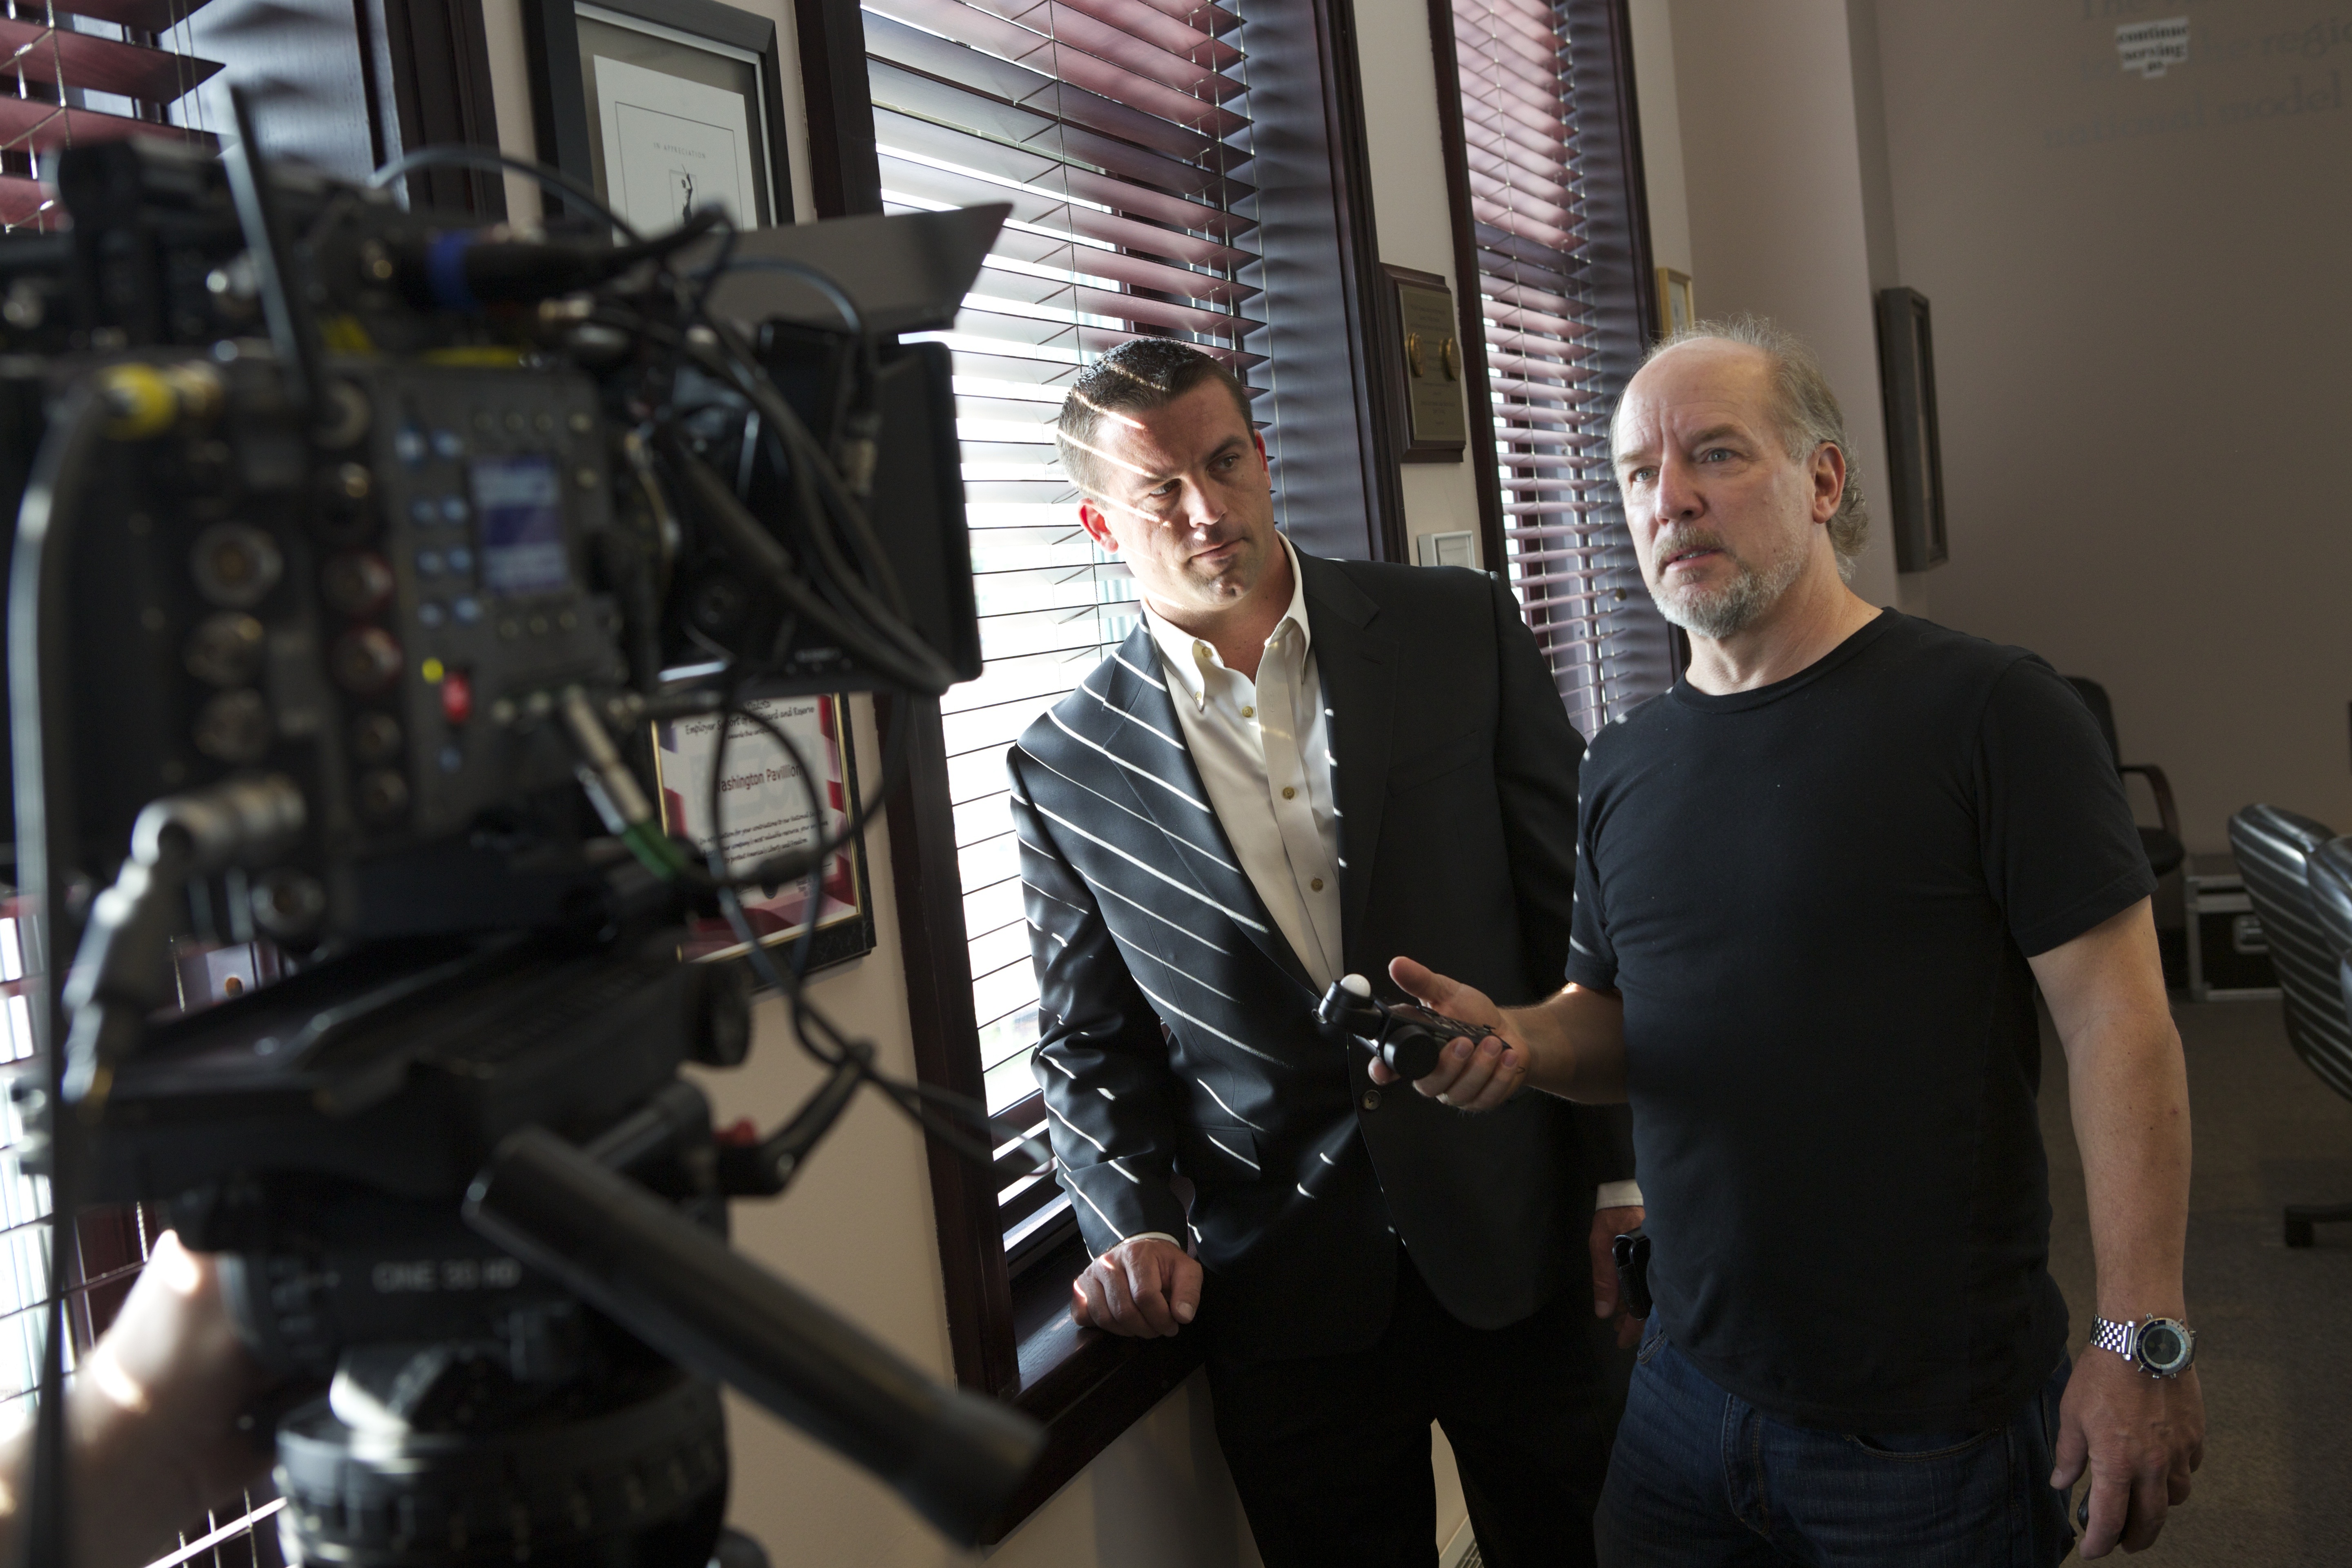 Filming THE SECRET BOX on location with Rob Stiff & Bill Holshevnikoff